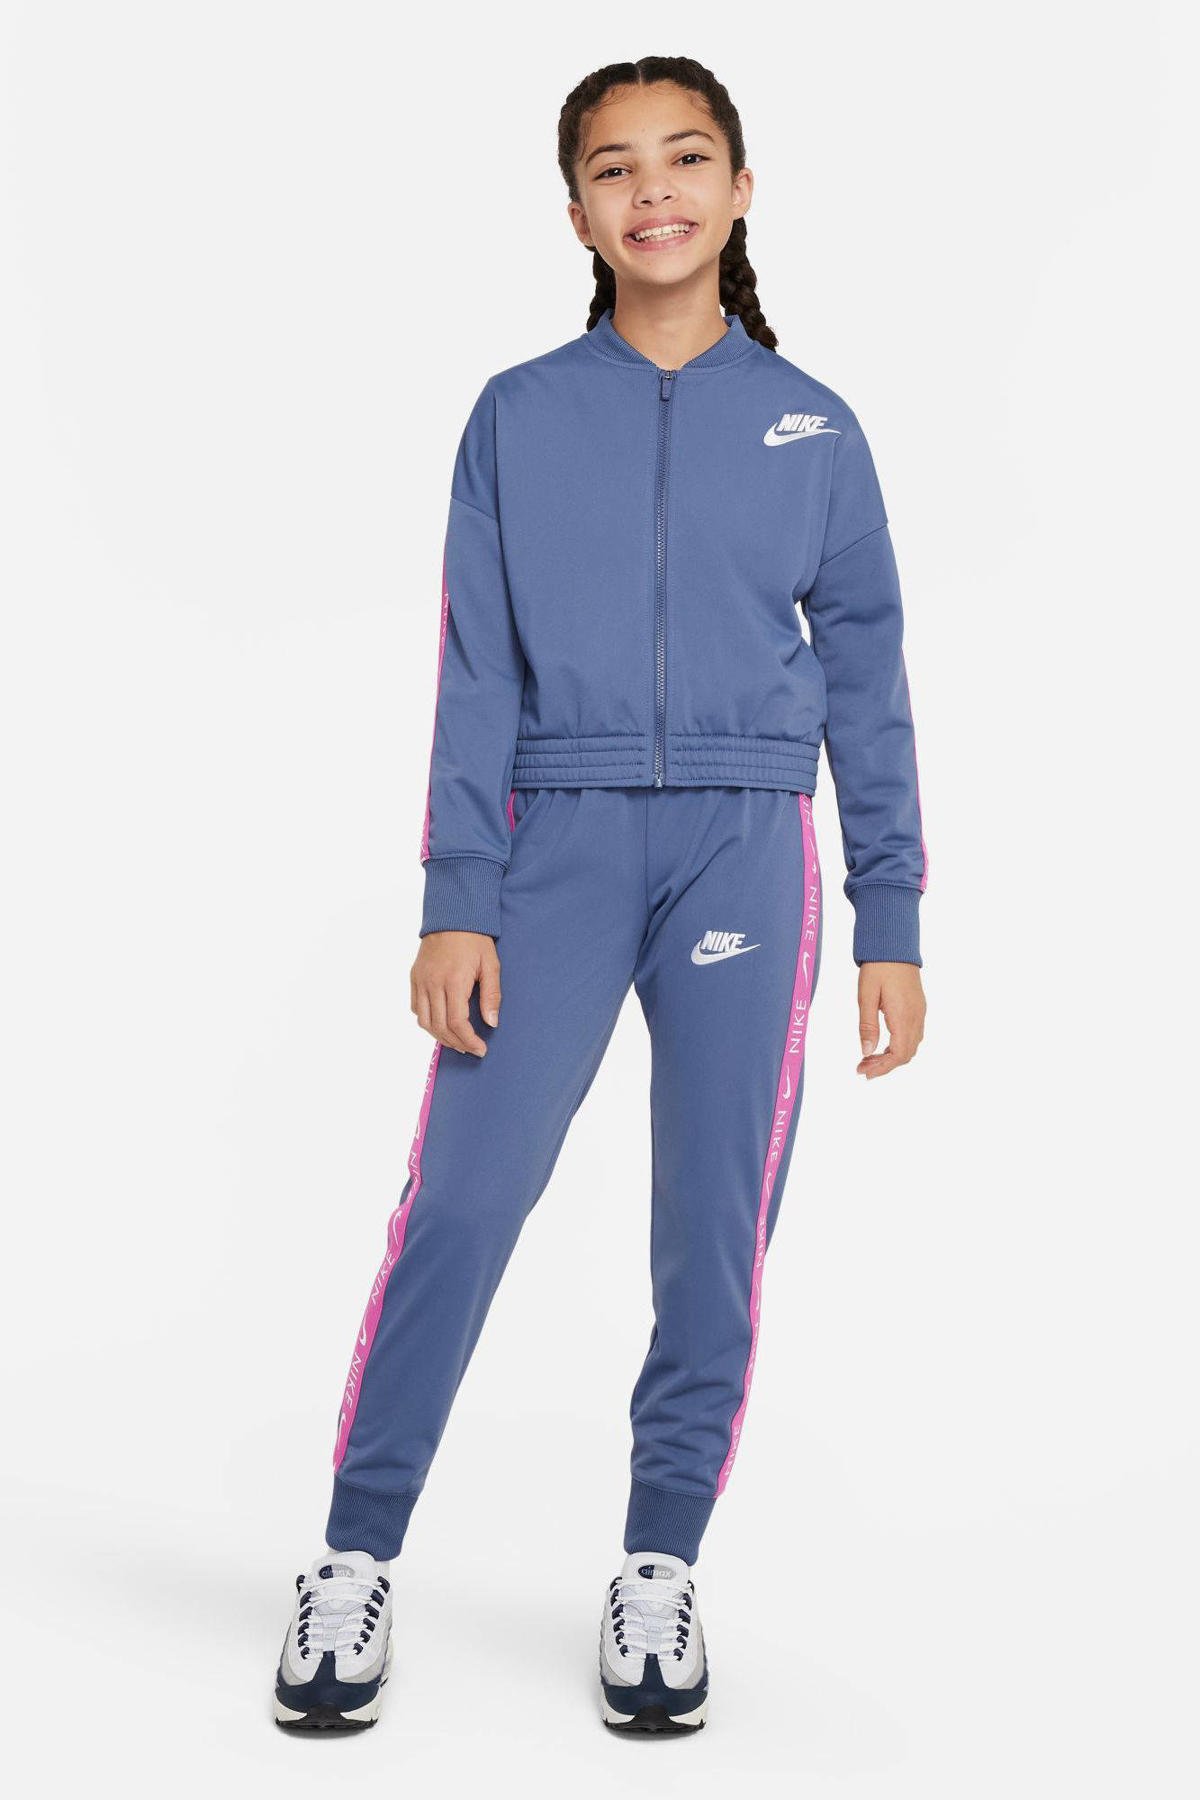 klink Gastvrijheid Verbieden Nike trainingspak blauw/roze | wehkamp